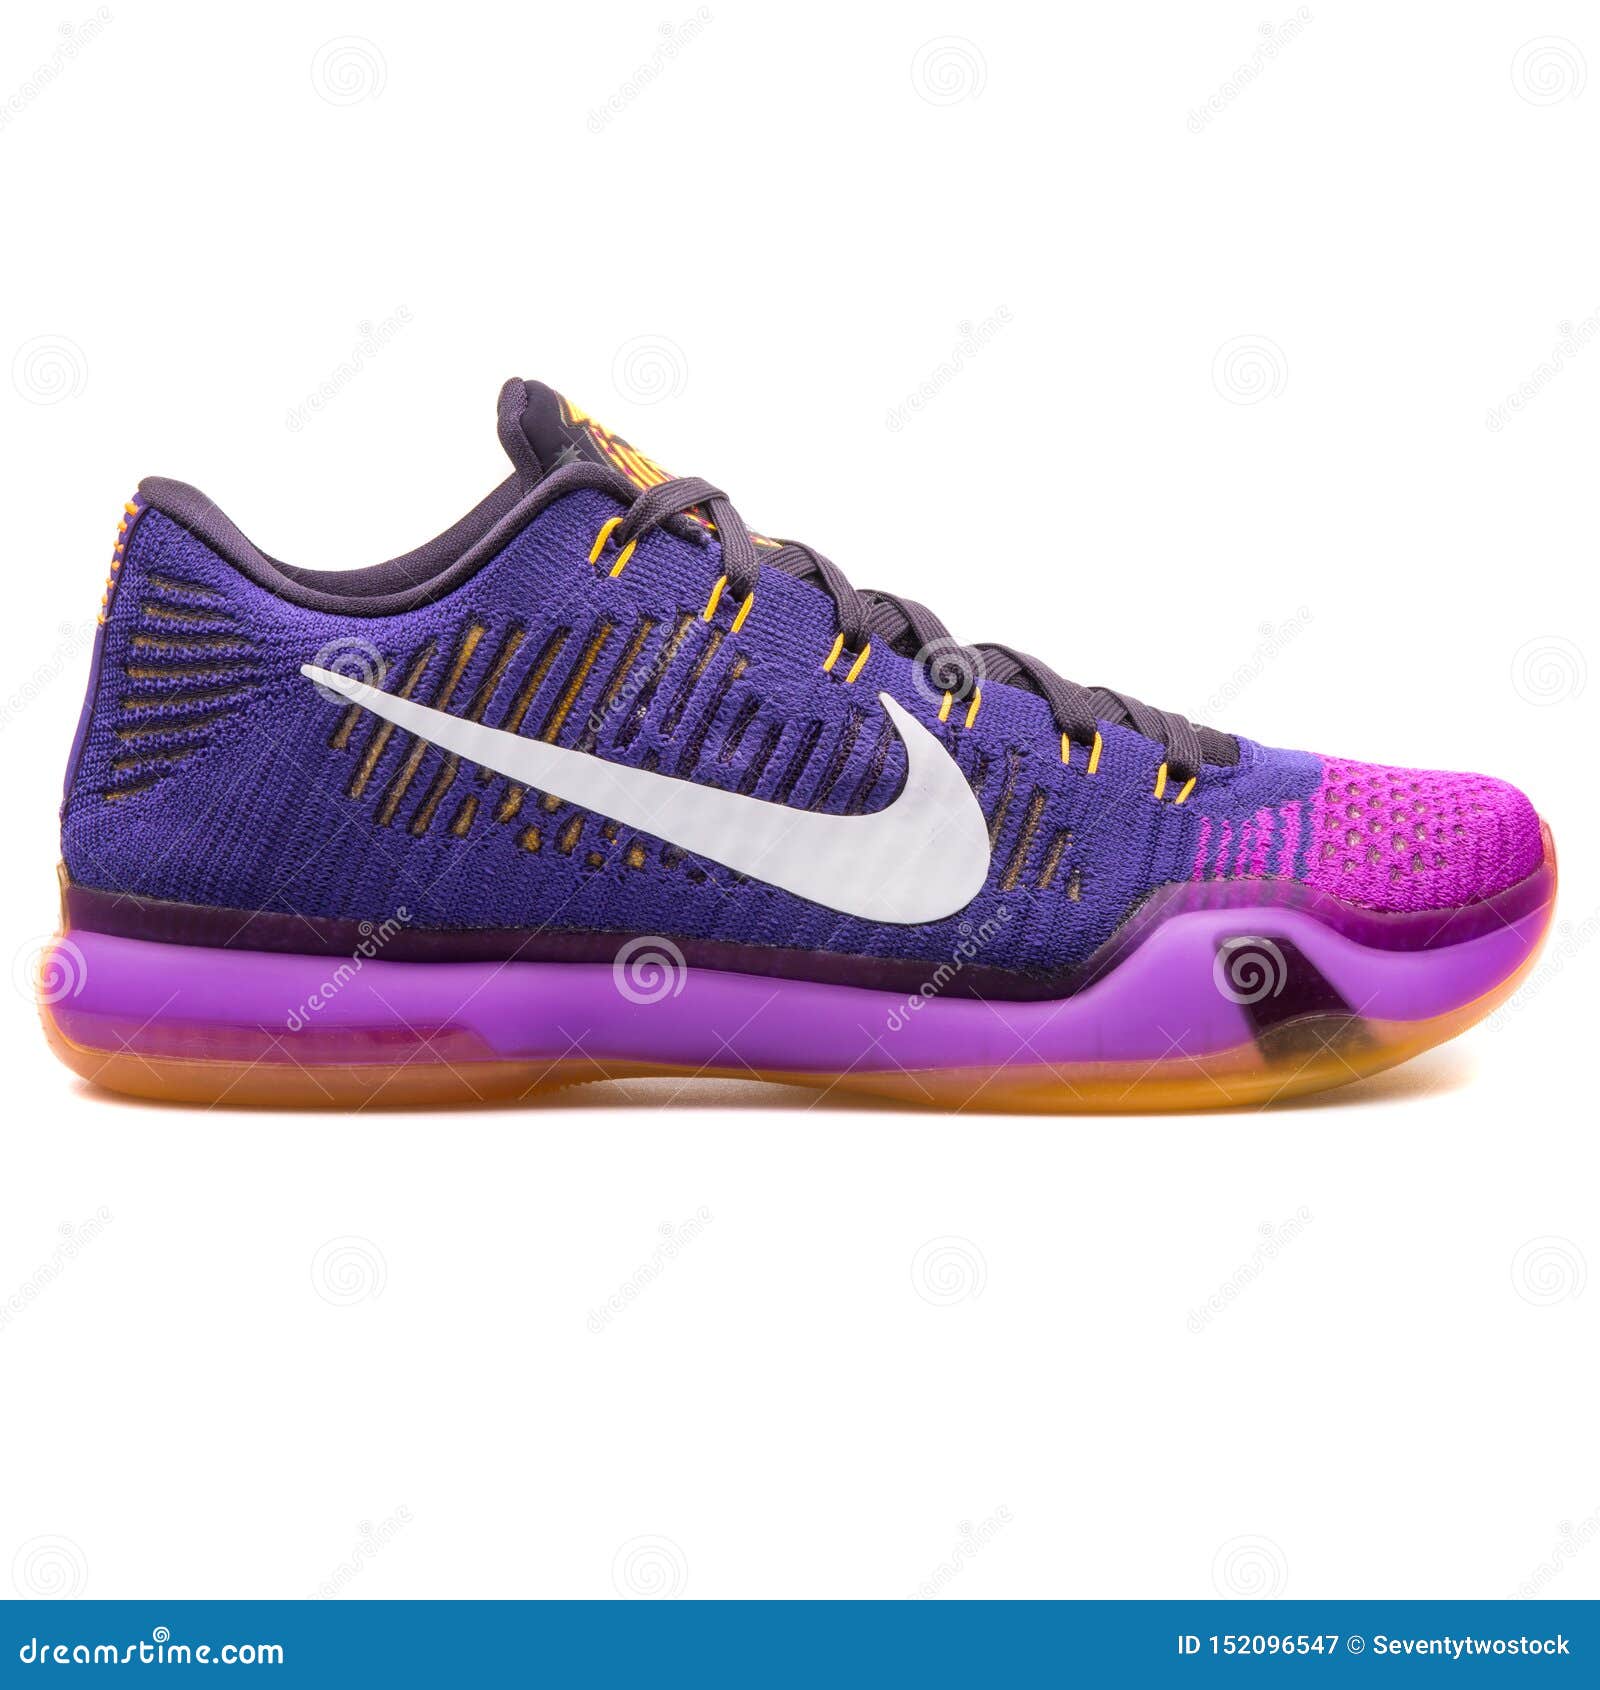 Nike Kobe X Elite Purple and White Sneaker Editorial Image of lifestyle, background: 152096547